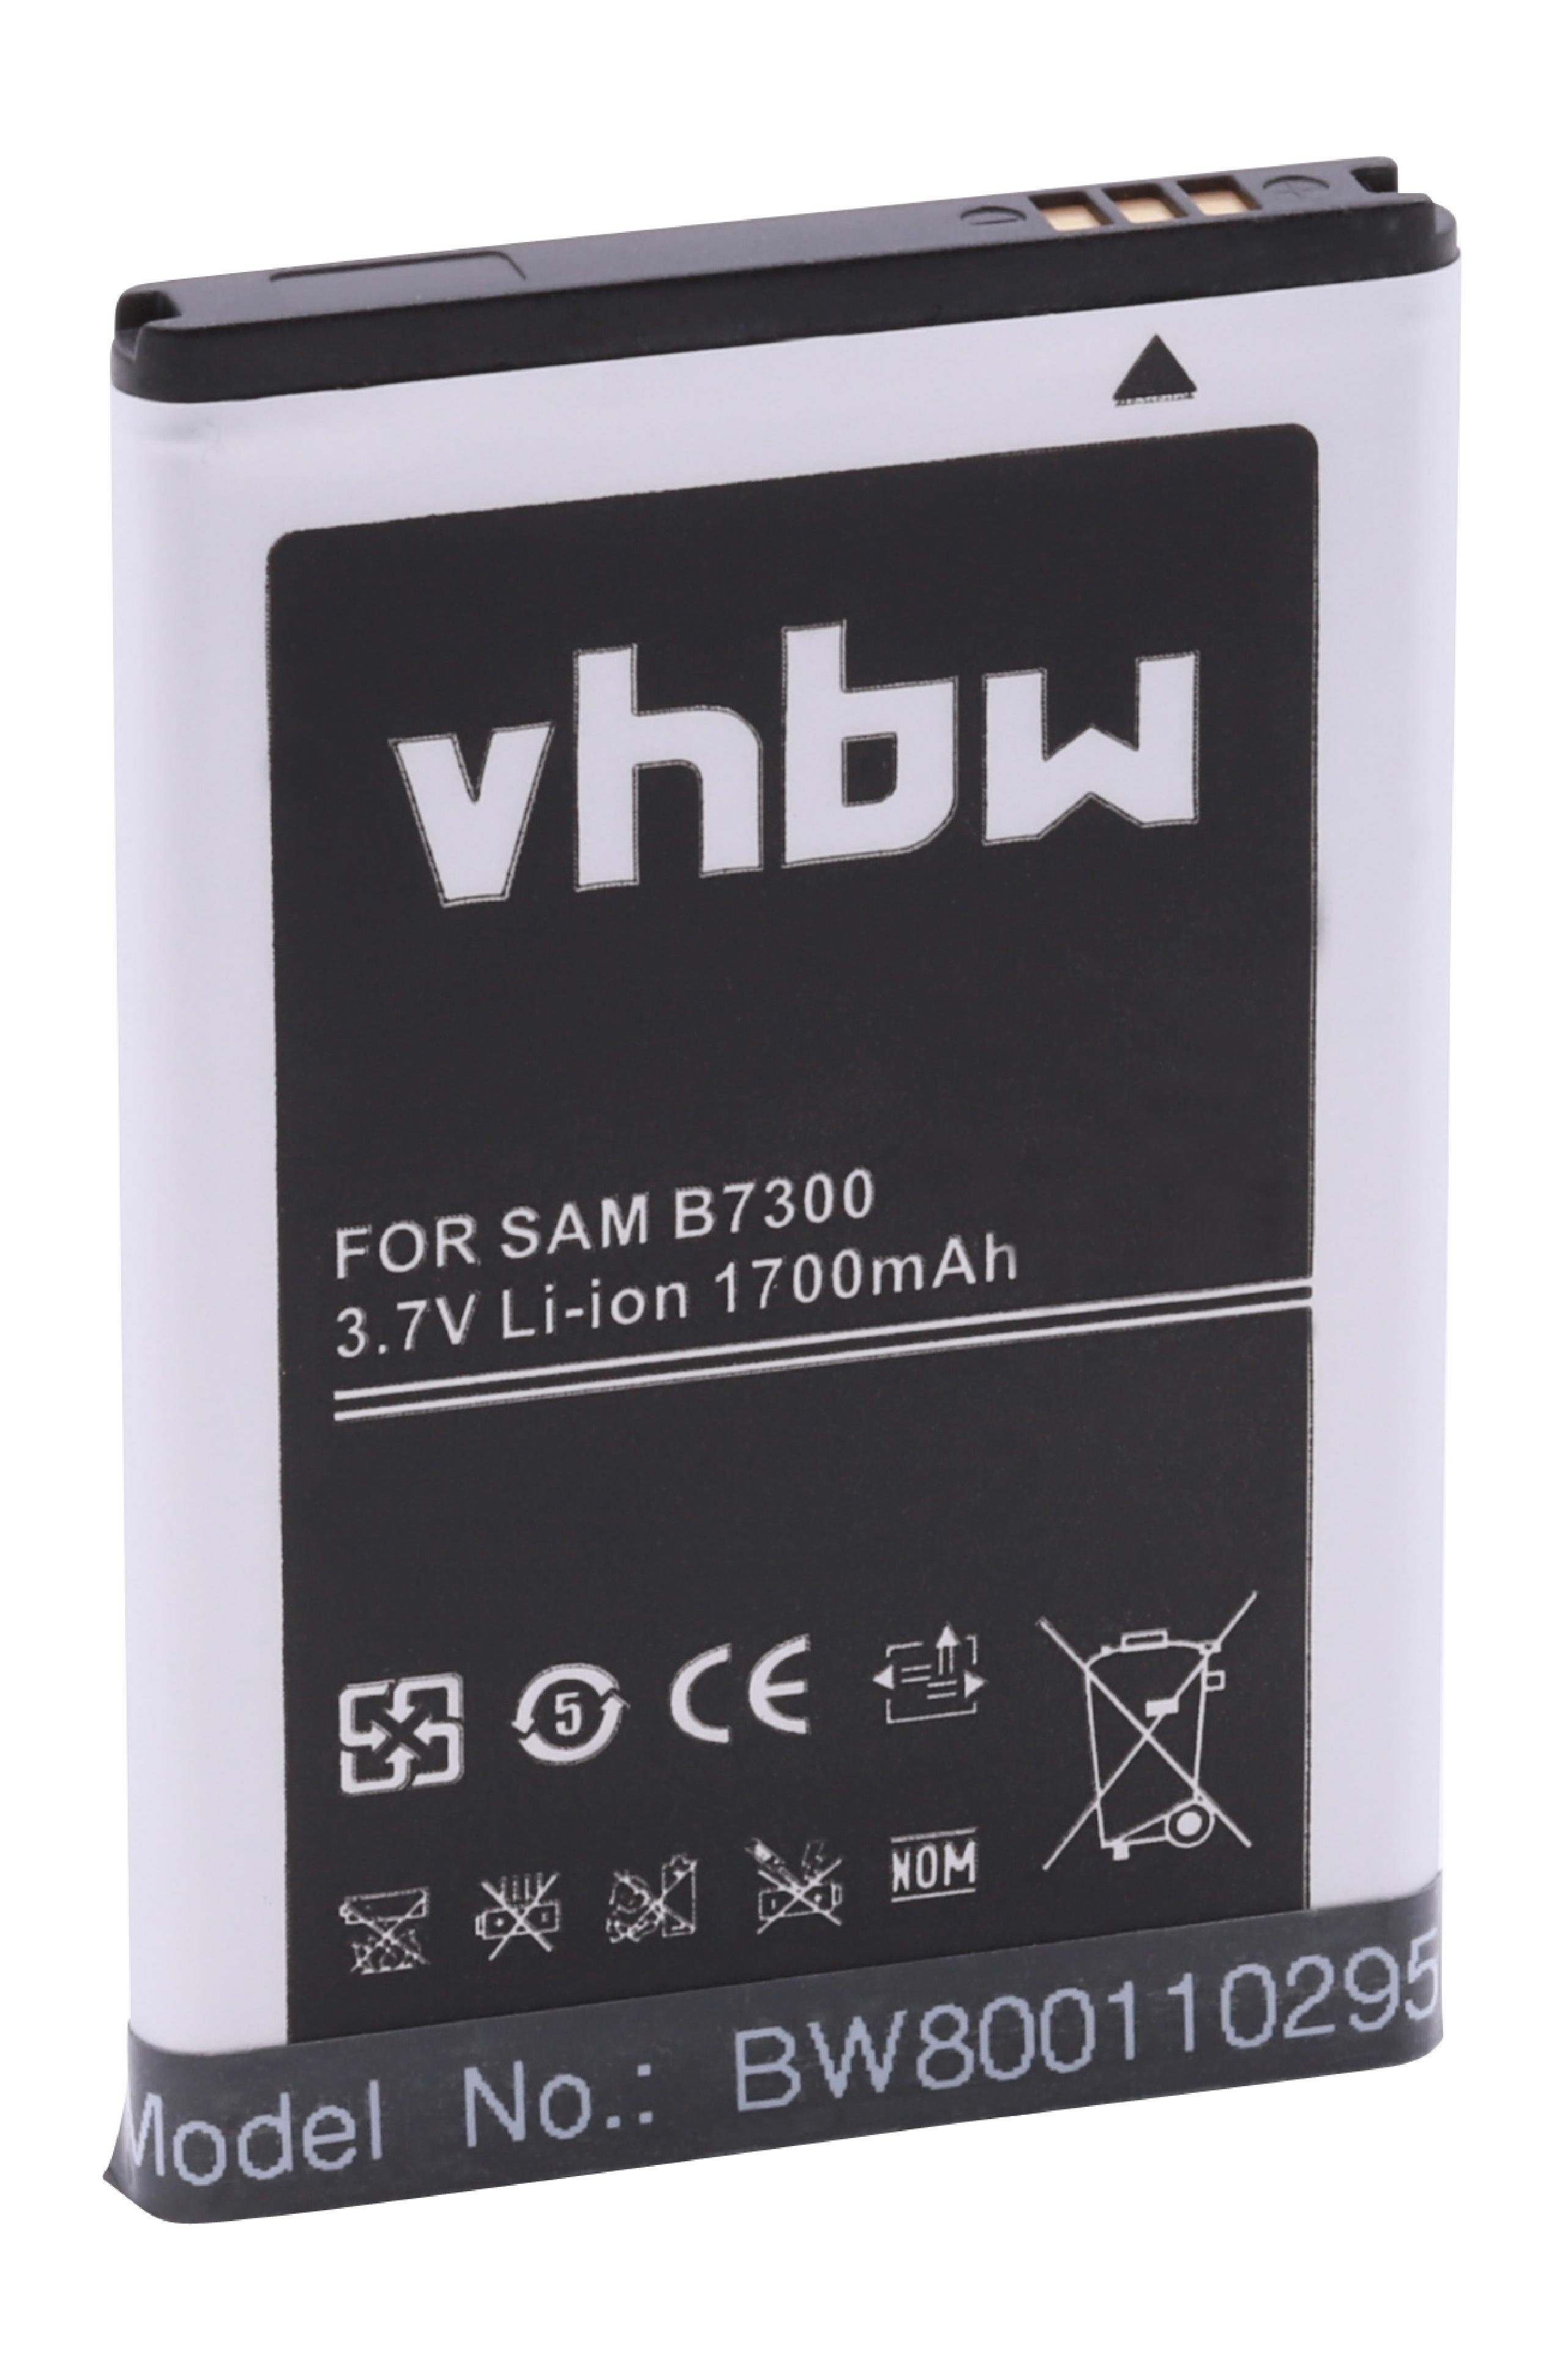 vhbw kompatibel mit Samsung Intercept R880, M910 Smartphone-Akku Li-Ion 1700 mAh (3,7 V)